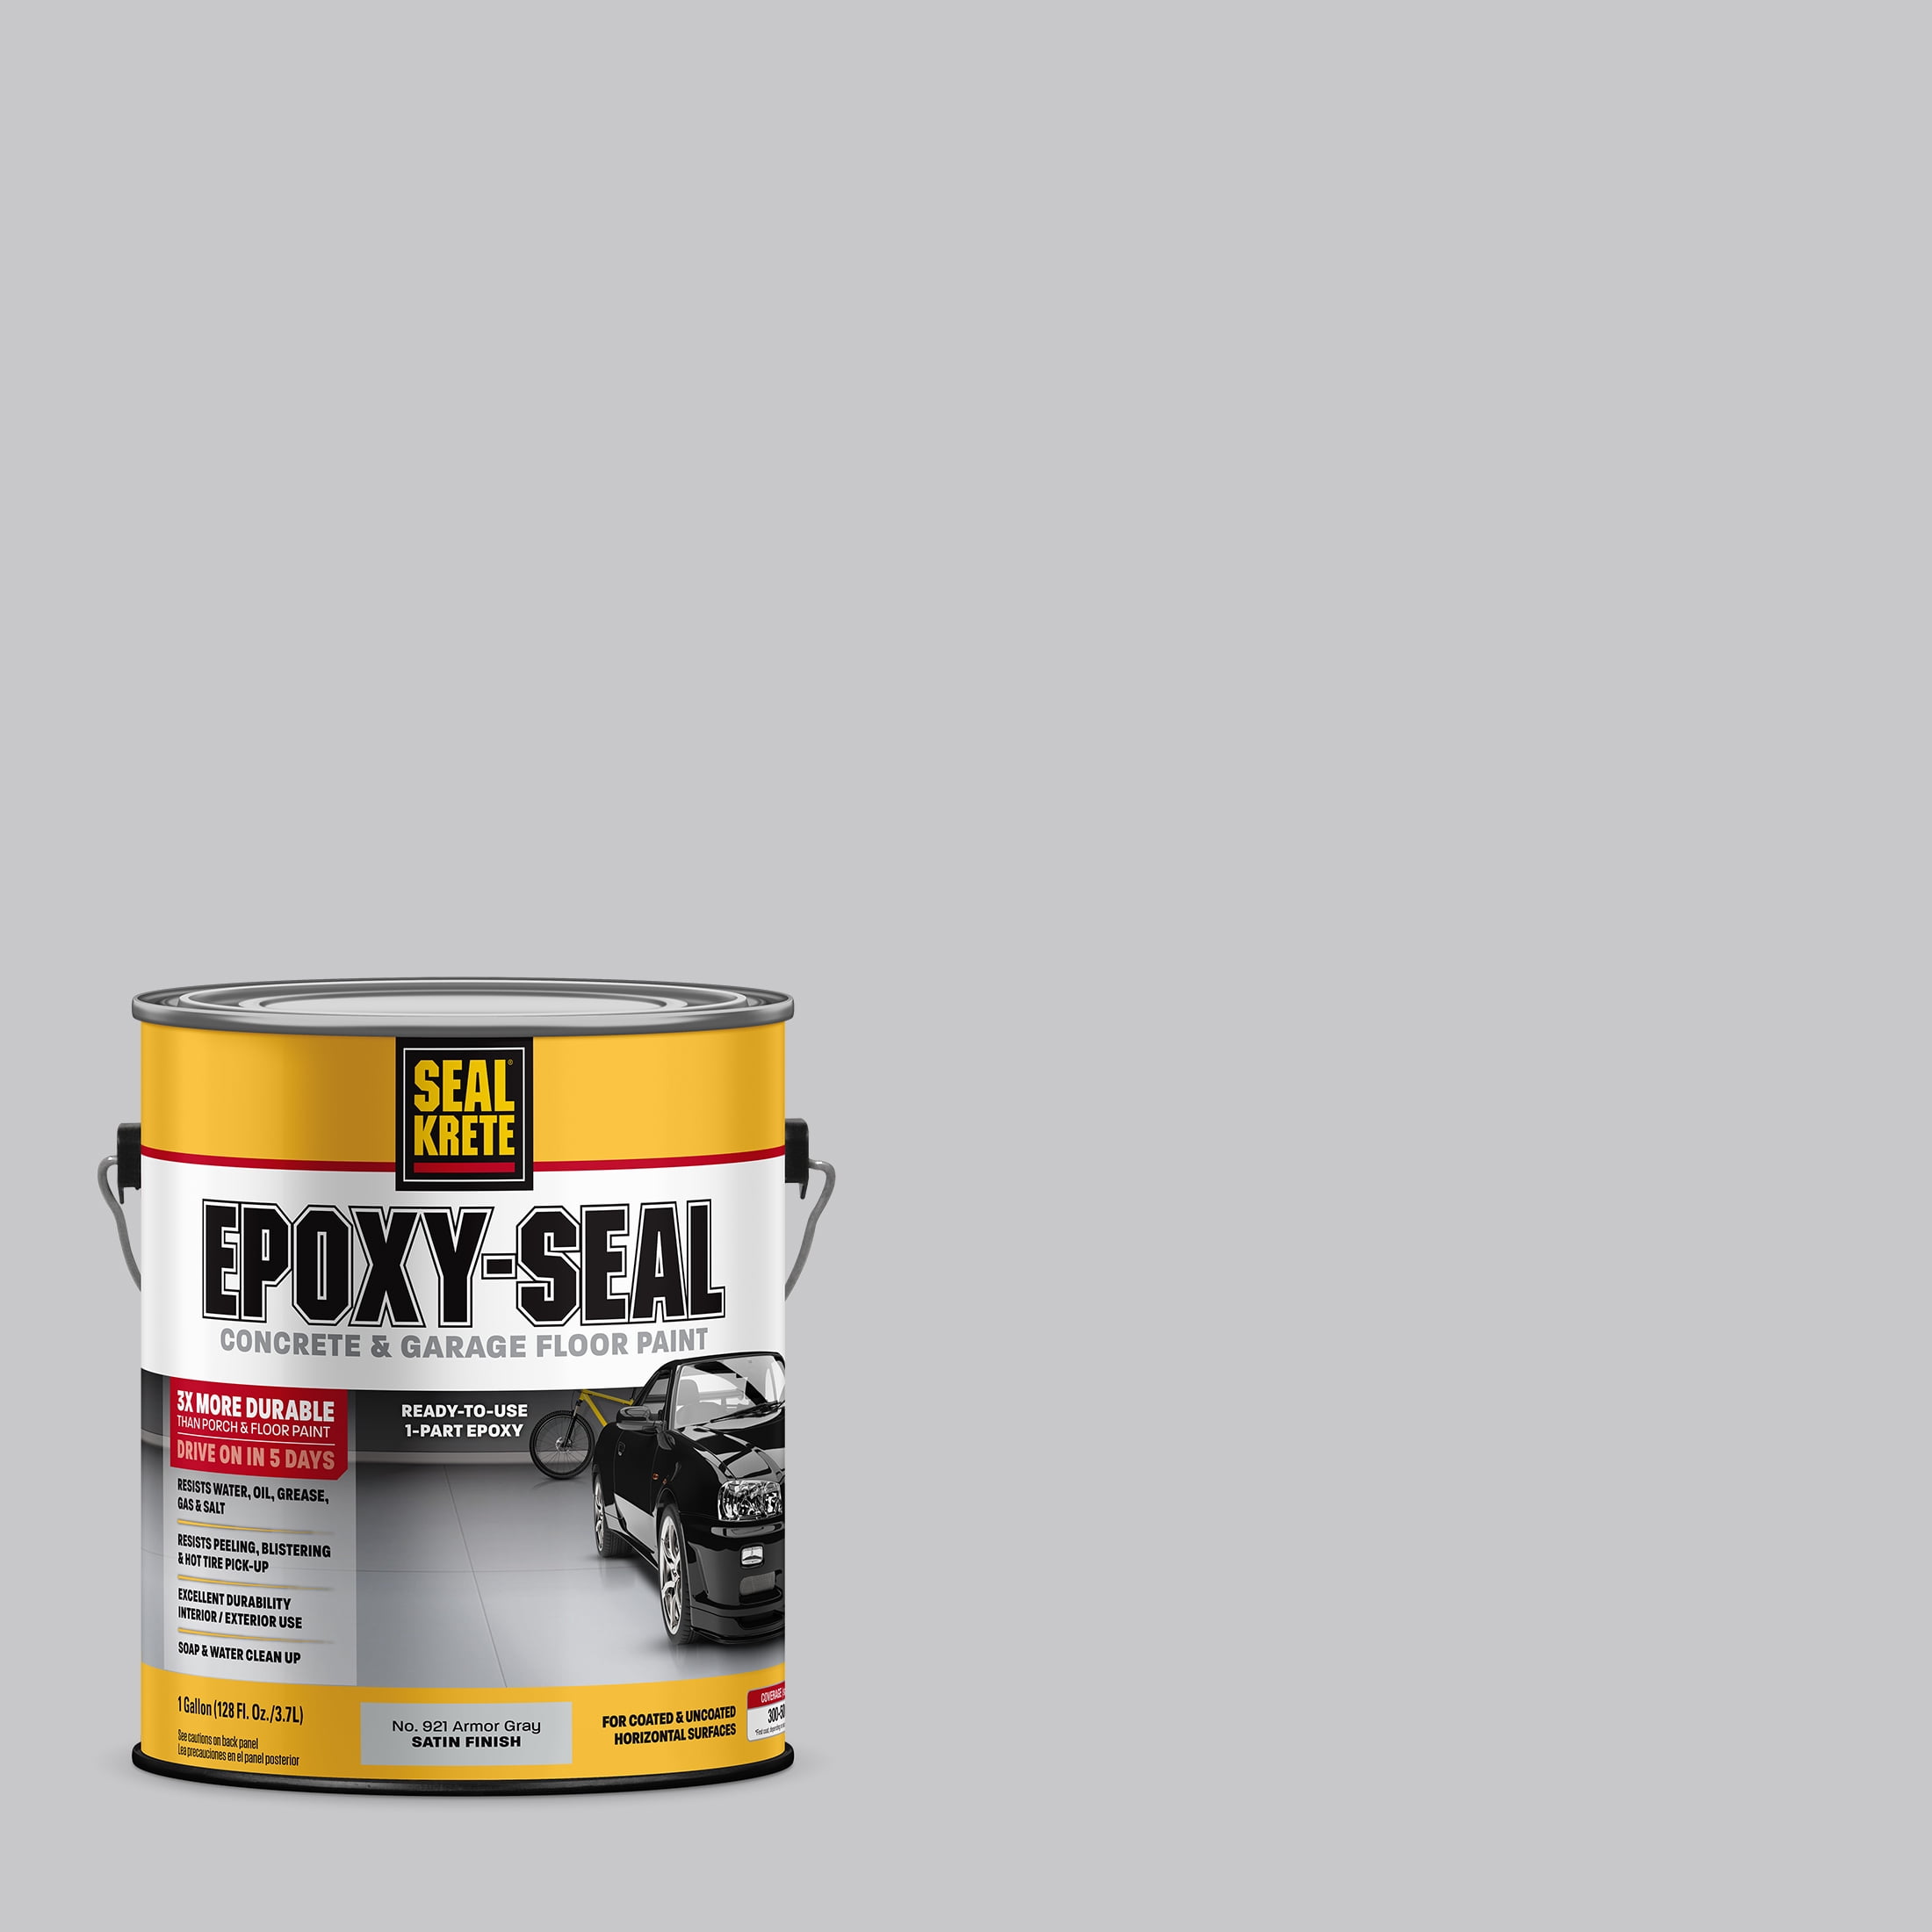 Armor Gray, Seal Krete Epoxy-Seal Low VOC Concrete and Garage Floor Paint-317396, Gallon